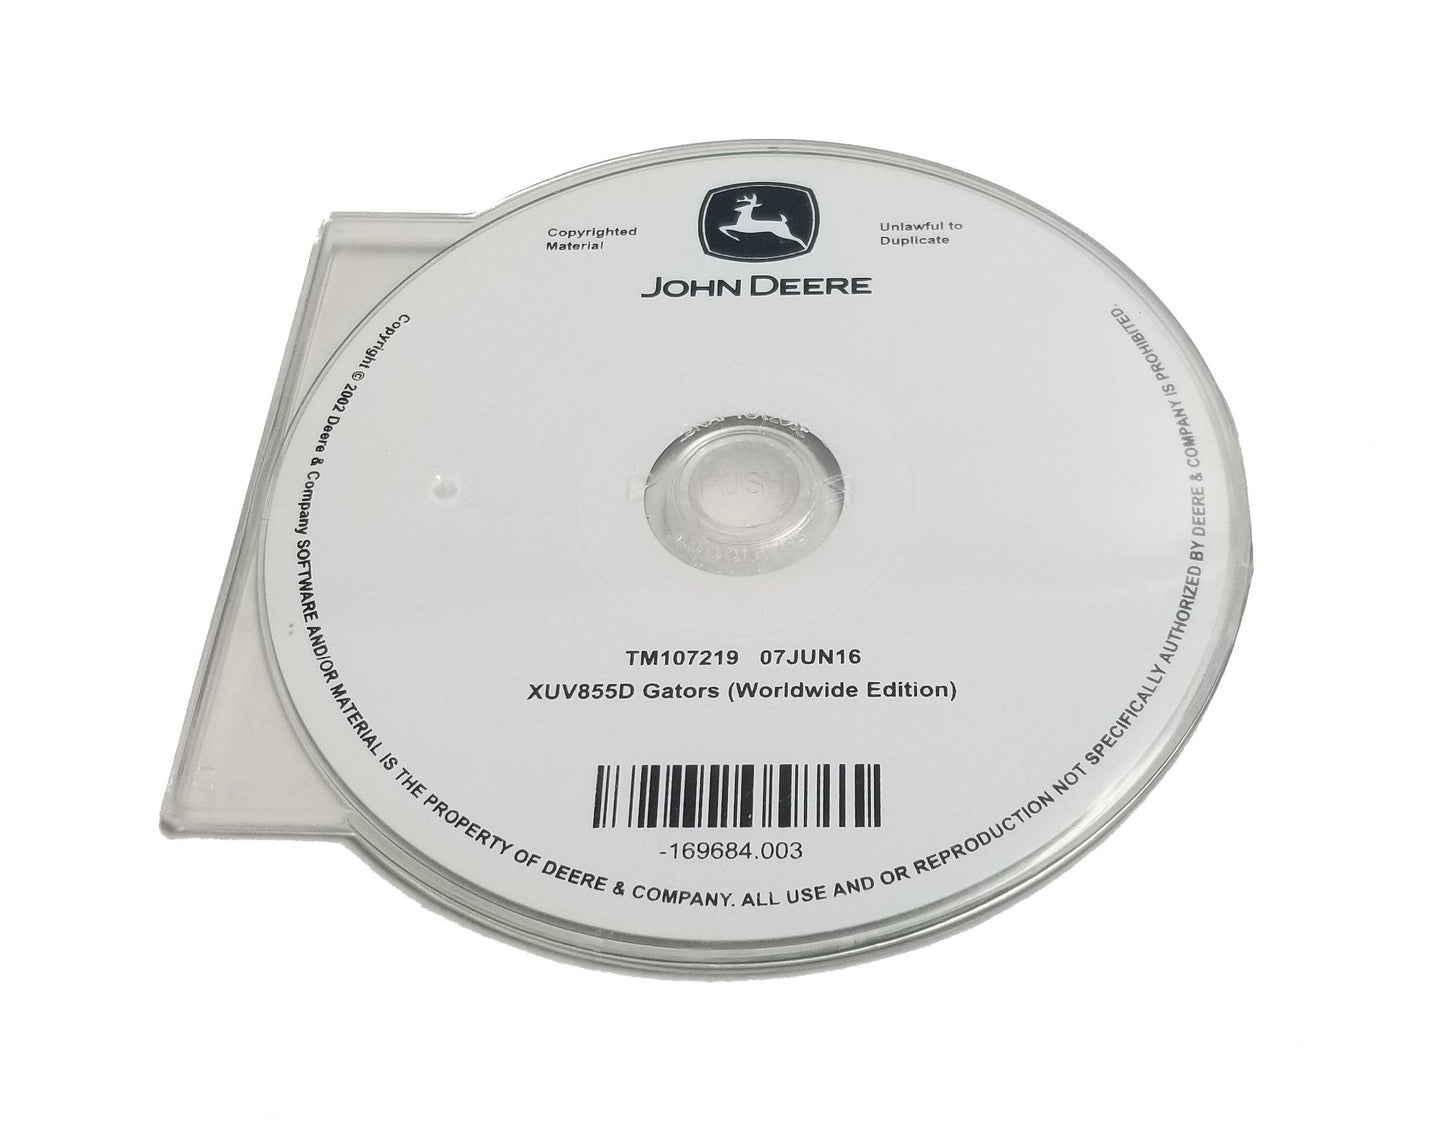 John Deere XUV855D Gator Utility Vehicle Technical CD Manual - TM107219CD